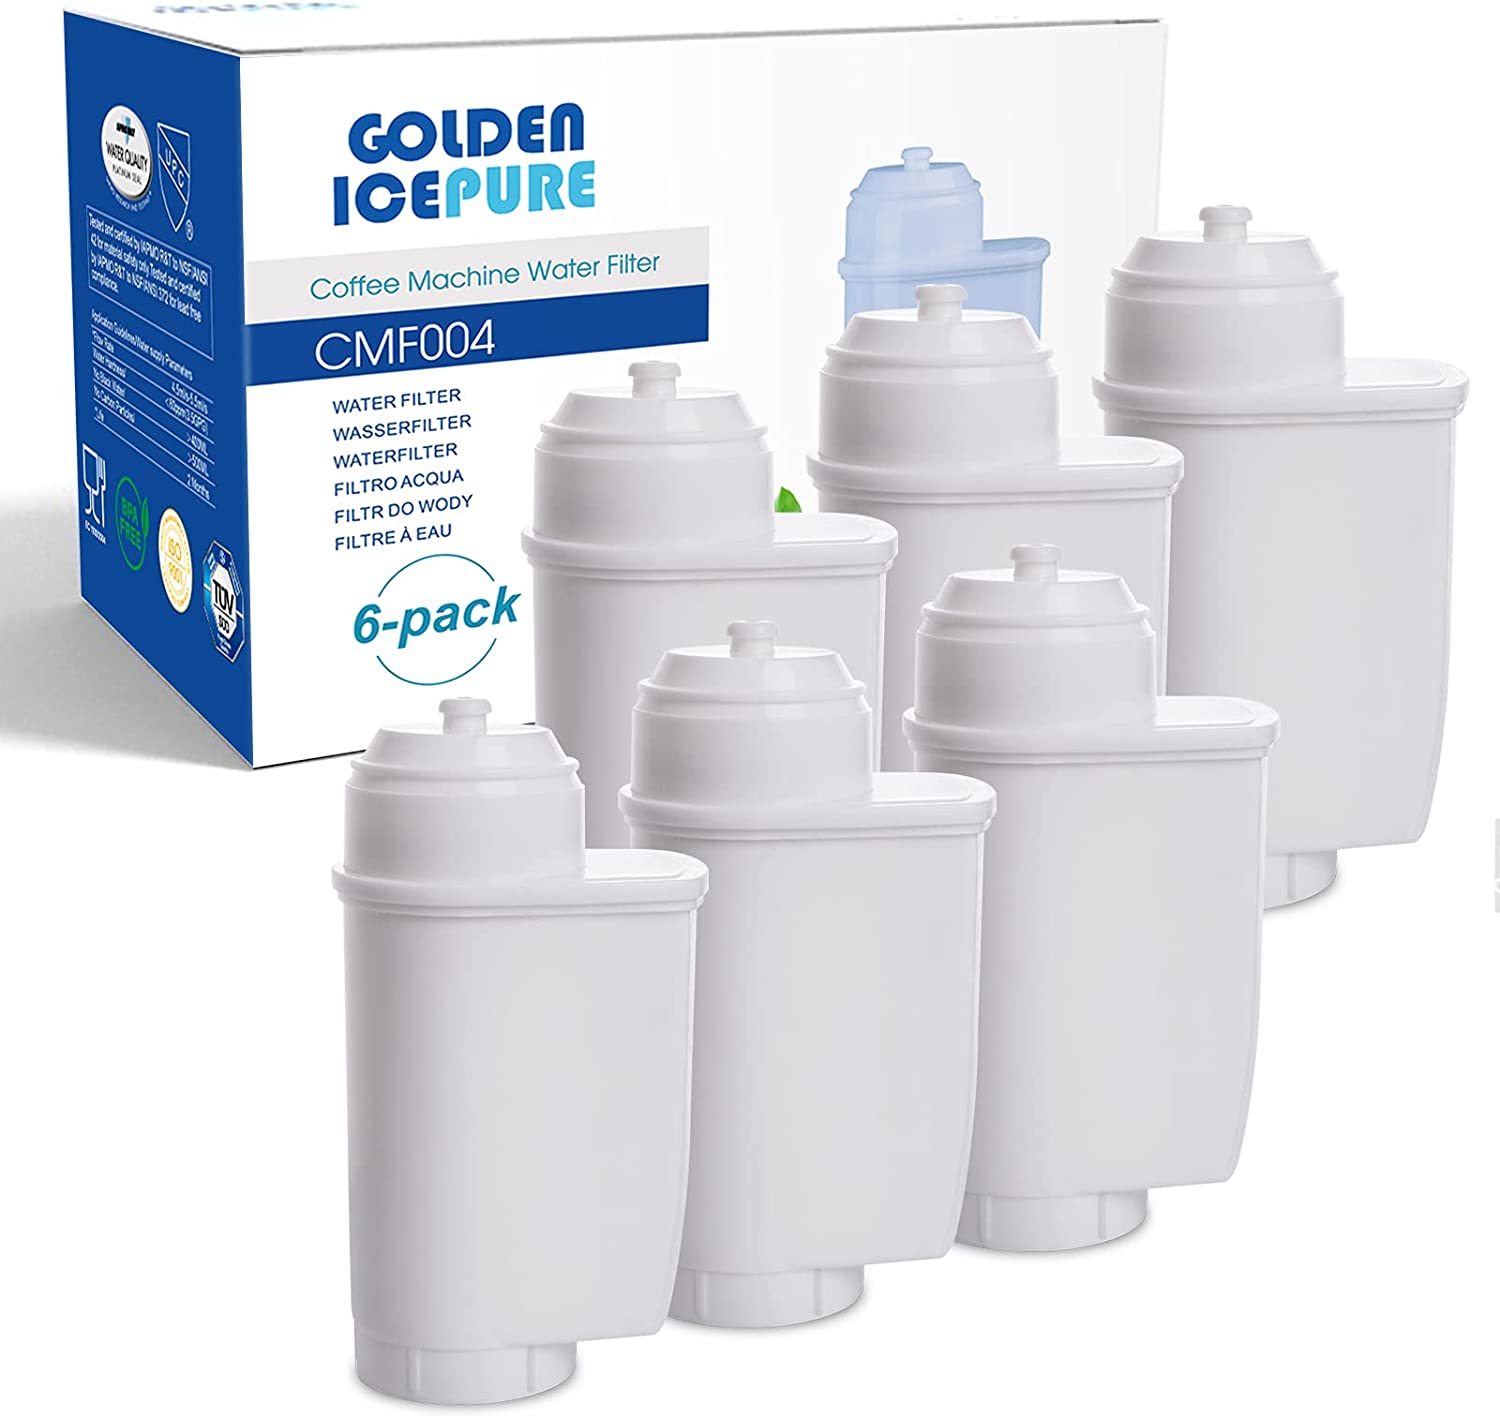 GOLDEN ICEPURE Coffee Water Filter Compatible with Siemens EQ Series, EQ 6, Siemens TZ70003, TCZ7003, TCZ7033, Brita Intenza, Bosch 12008246 Water Filter, BCM8450UC Pack of 6